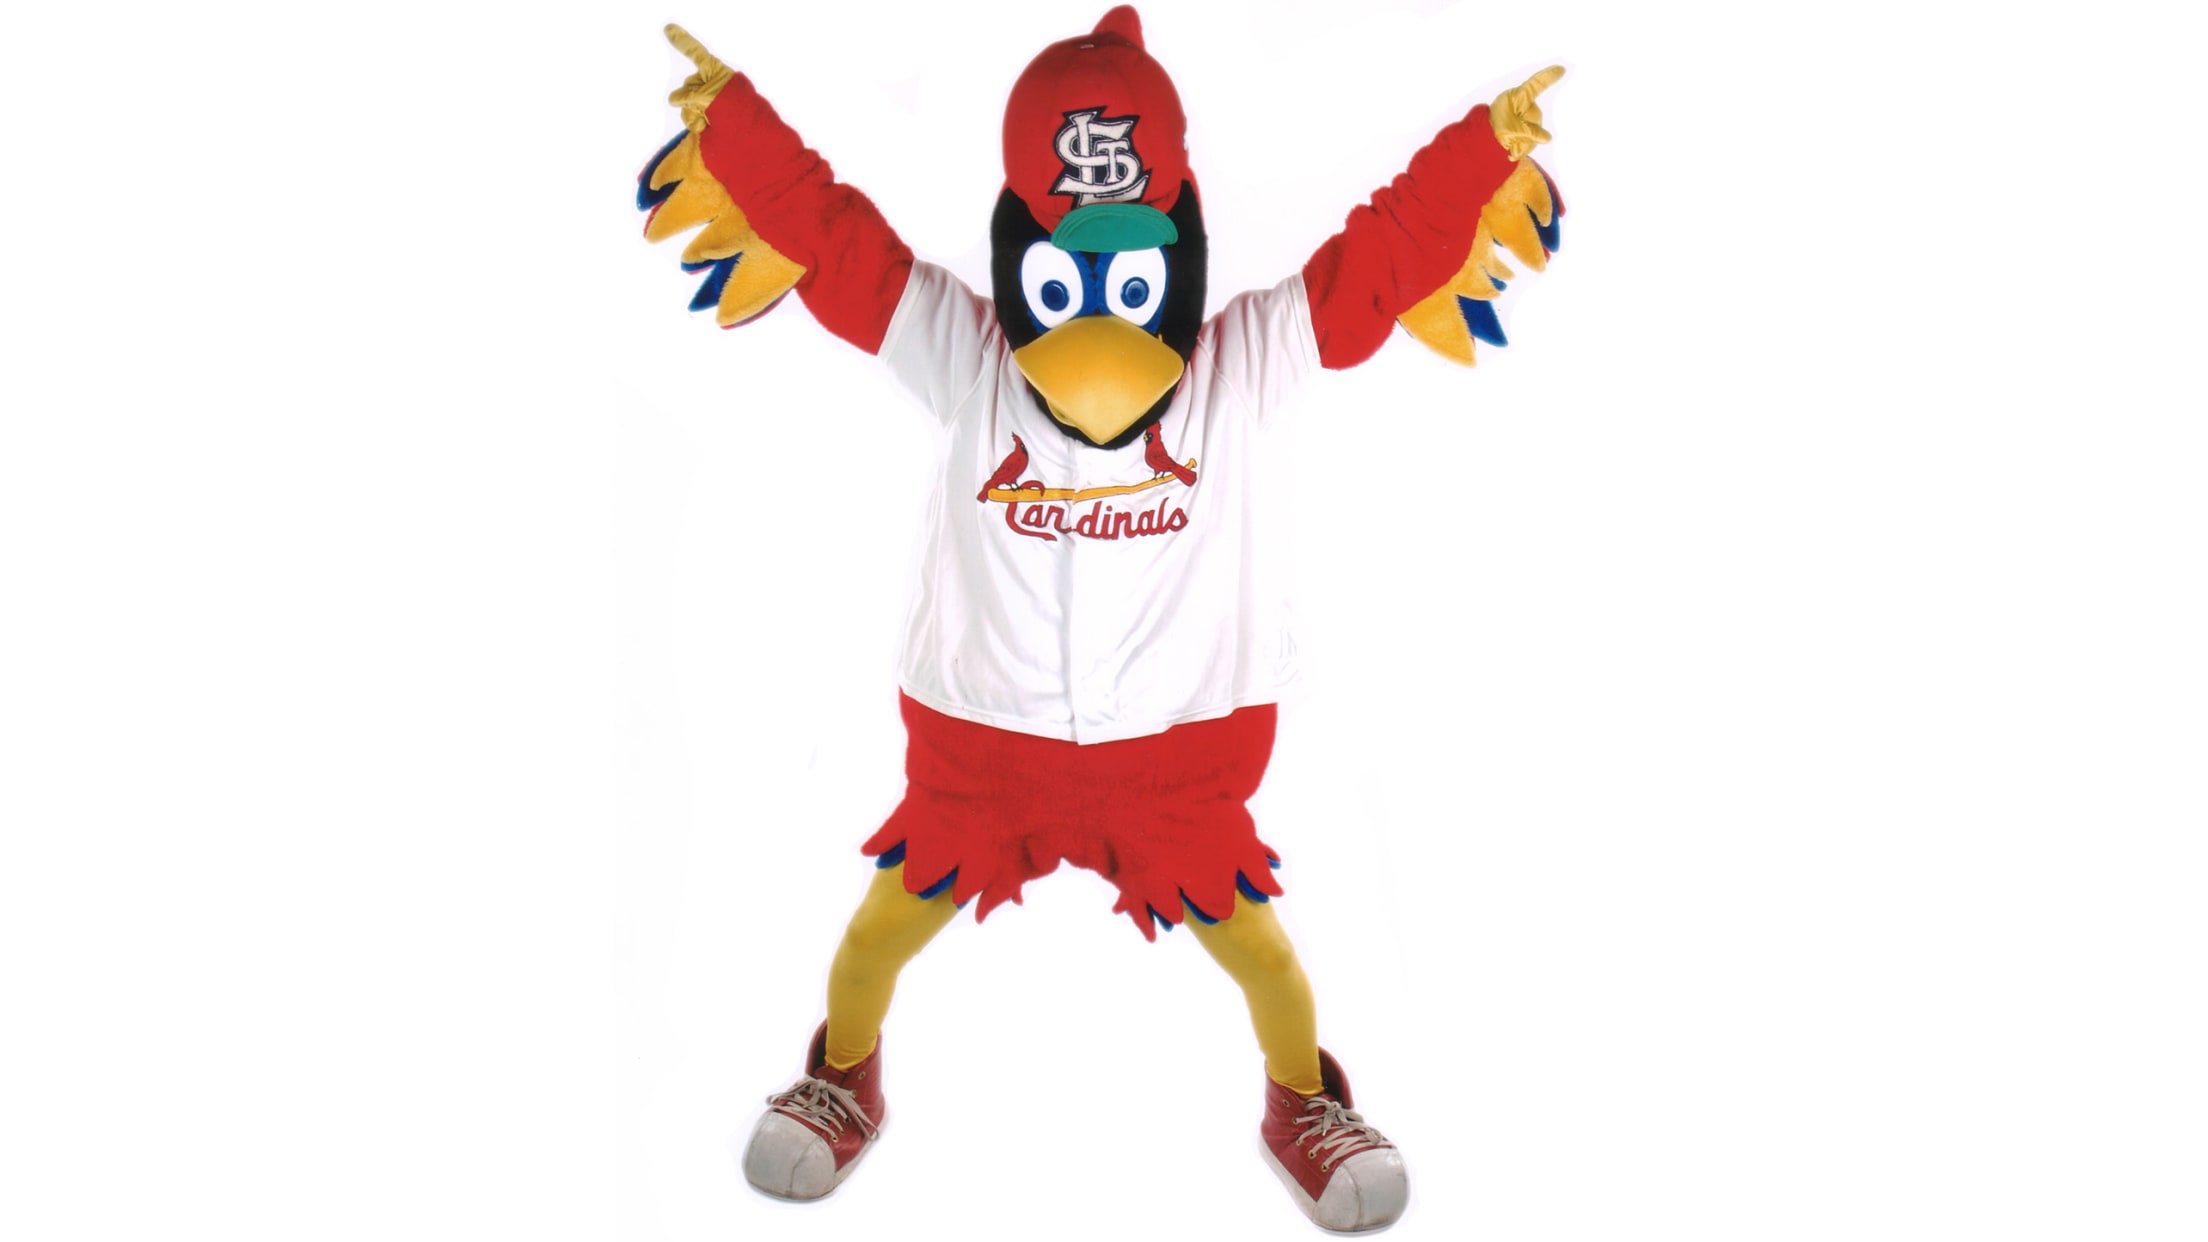 Fredbird St Louis Cardinals 2023 All-Star Bobbles on Parade Mascot